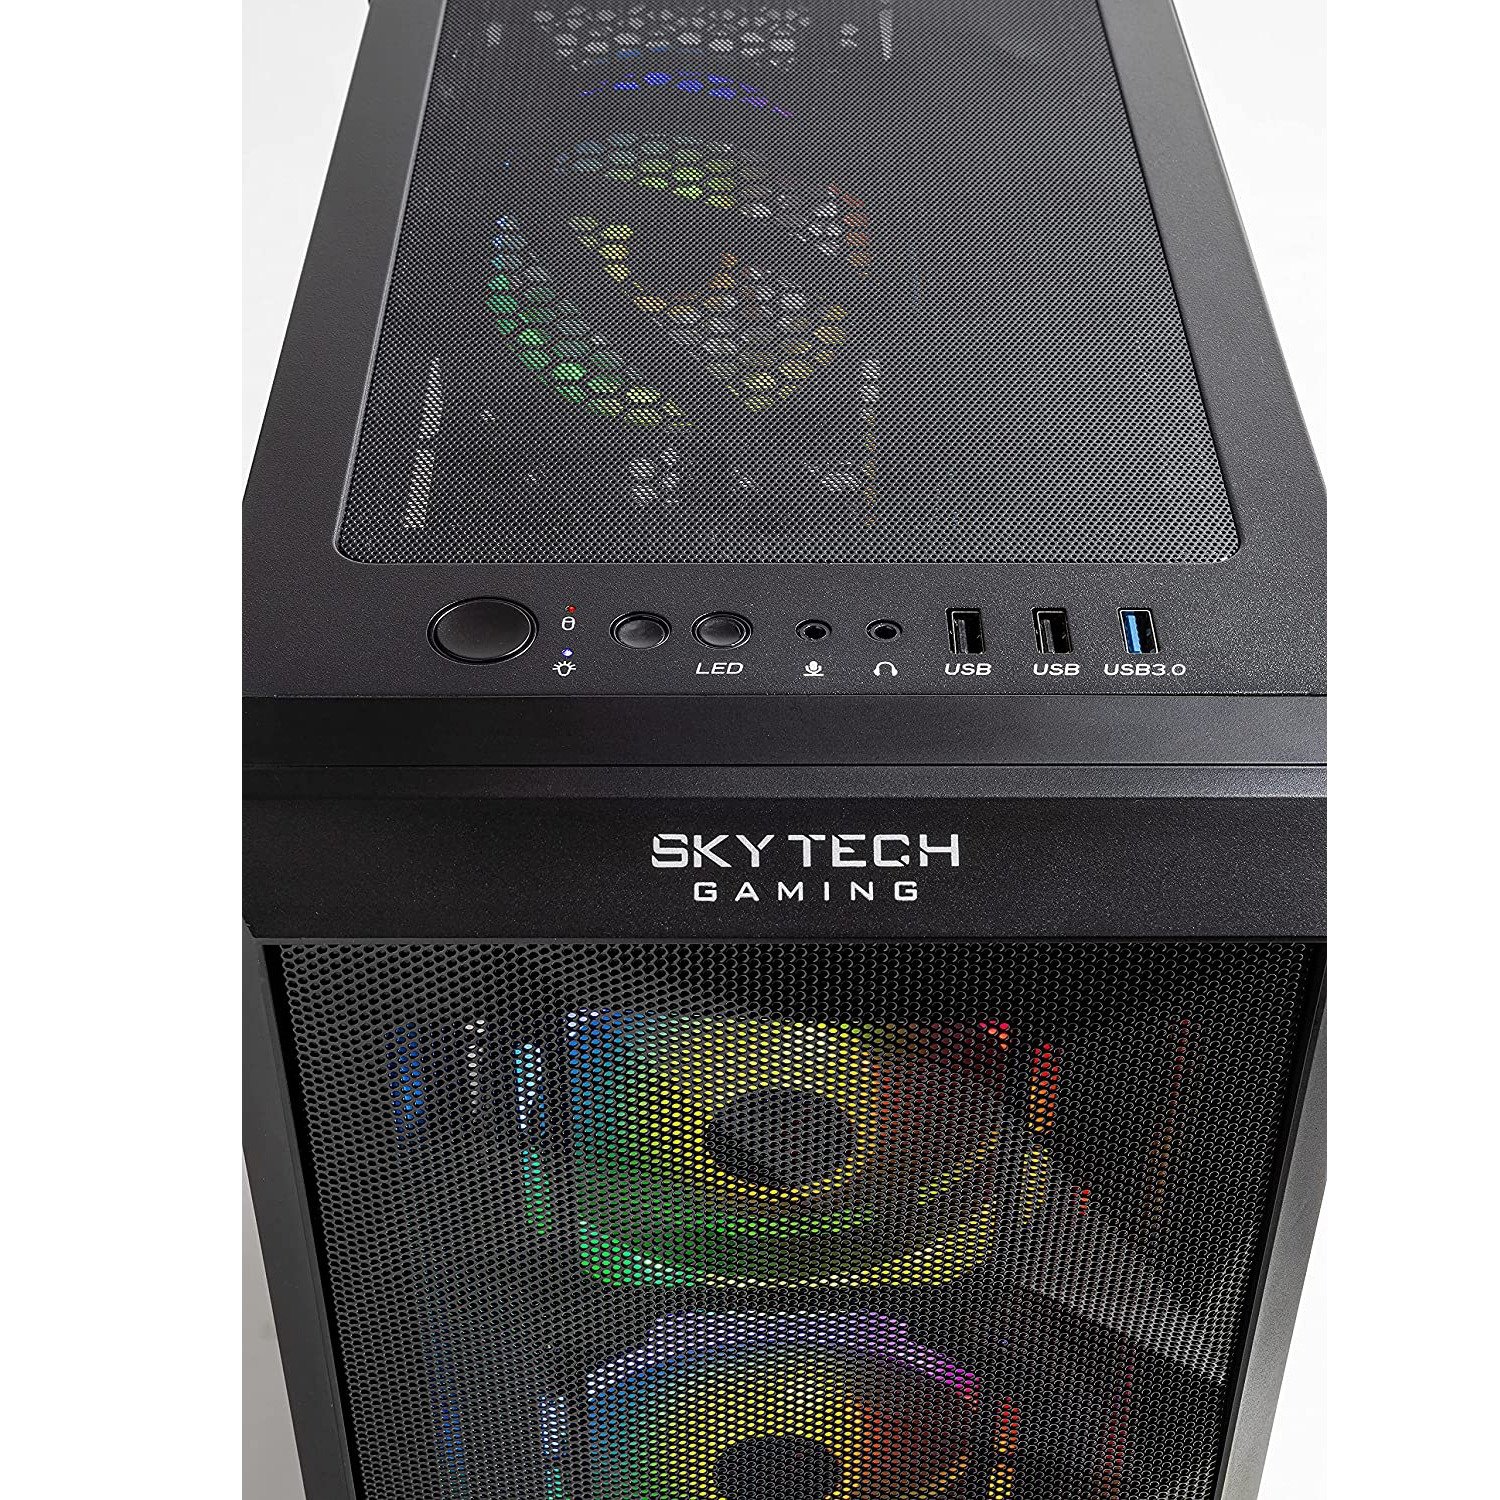 Skytech Chronos Mini Gaming Pc Desktop- AMD Ryzen 3 1200 4-Core